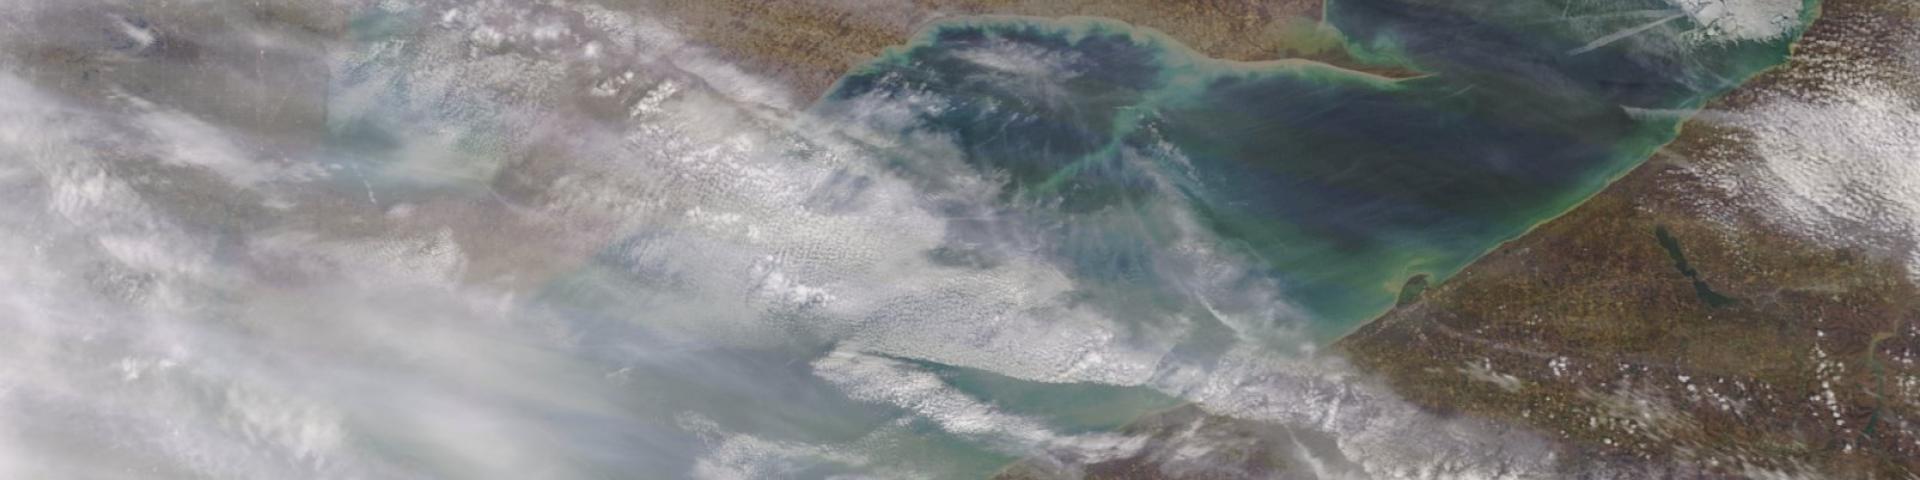 Lake Erie Ice Cover April 17, 2019 (NOAA CoastWatch MODIS Imagery)